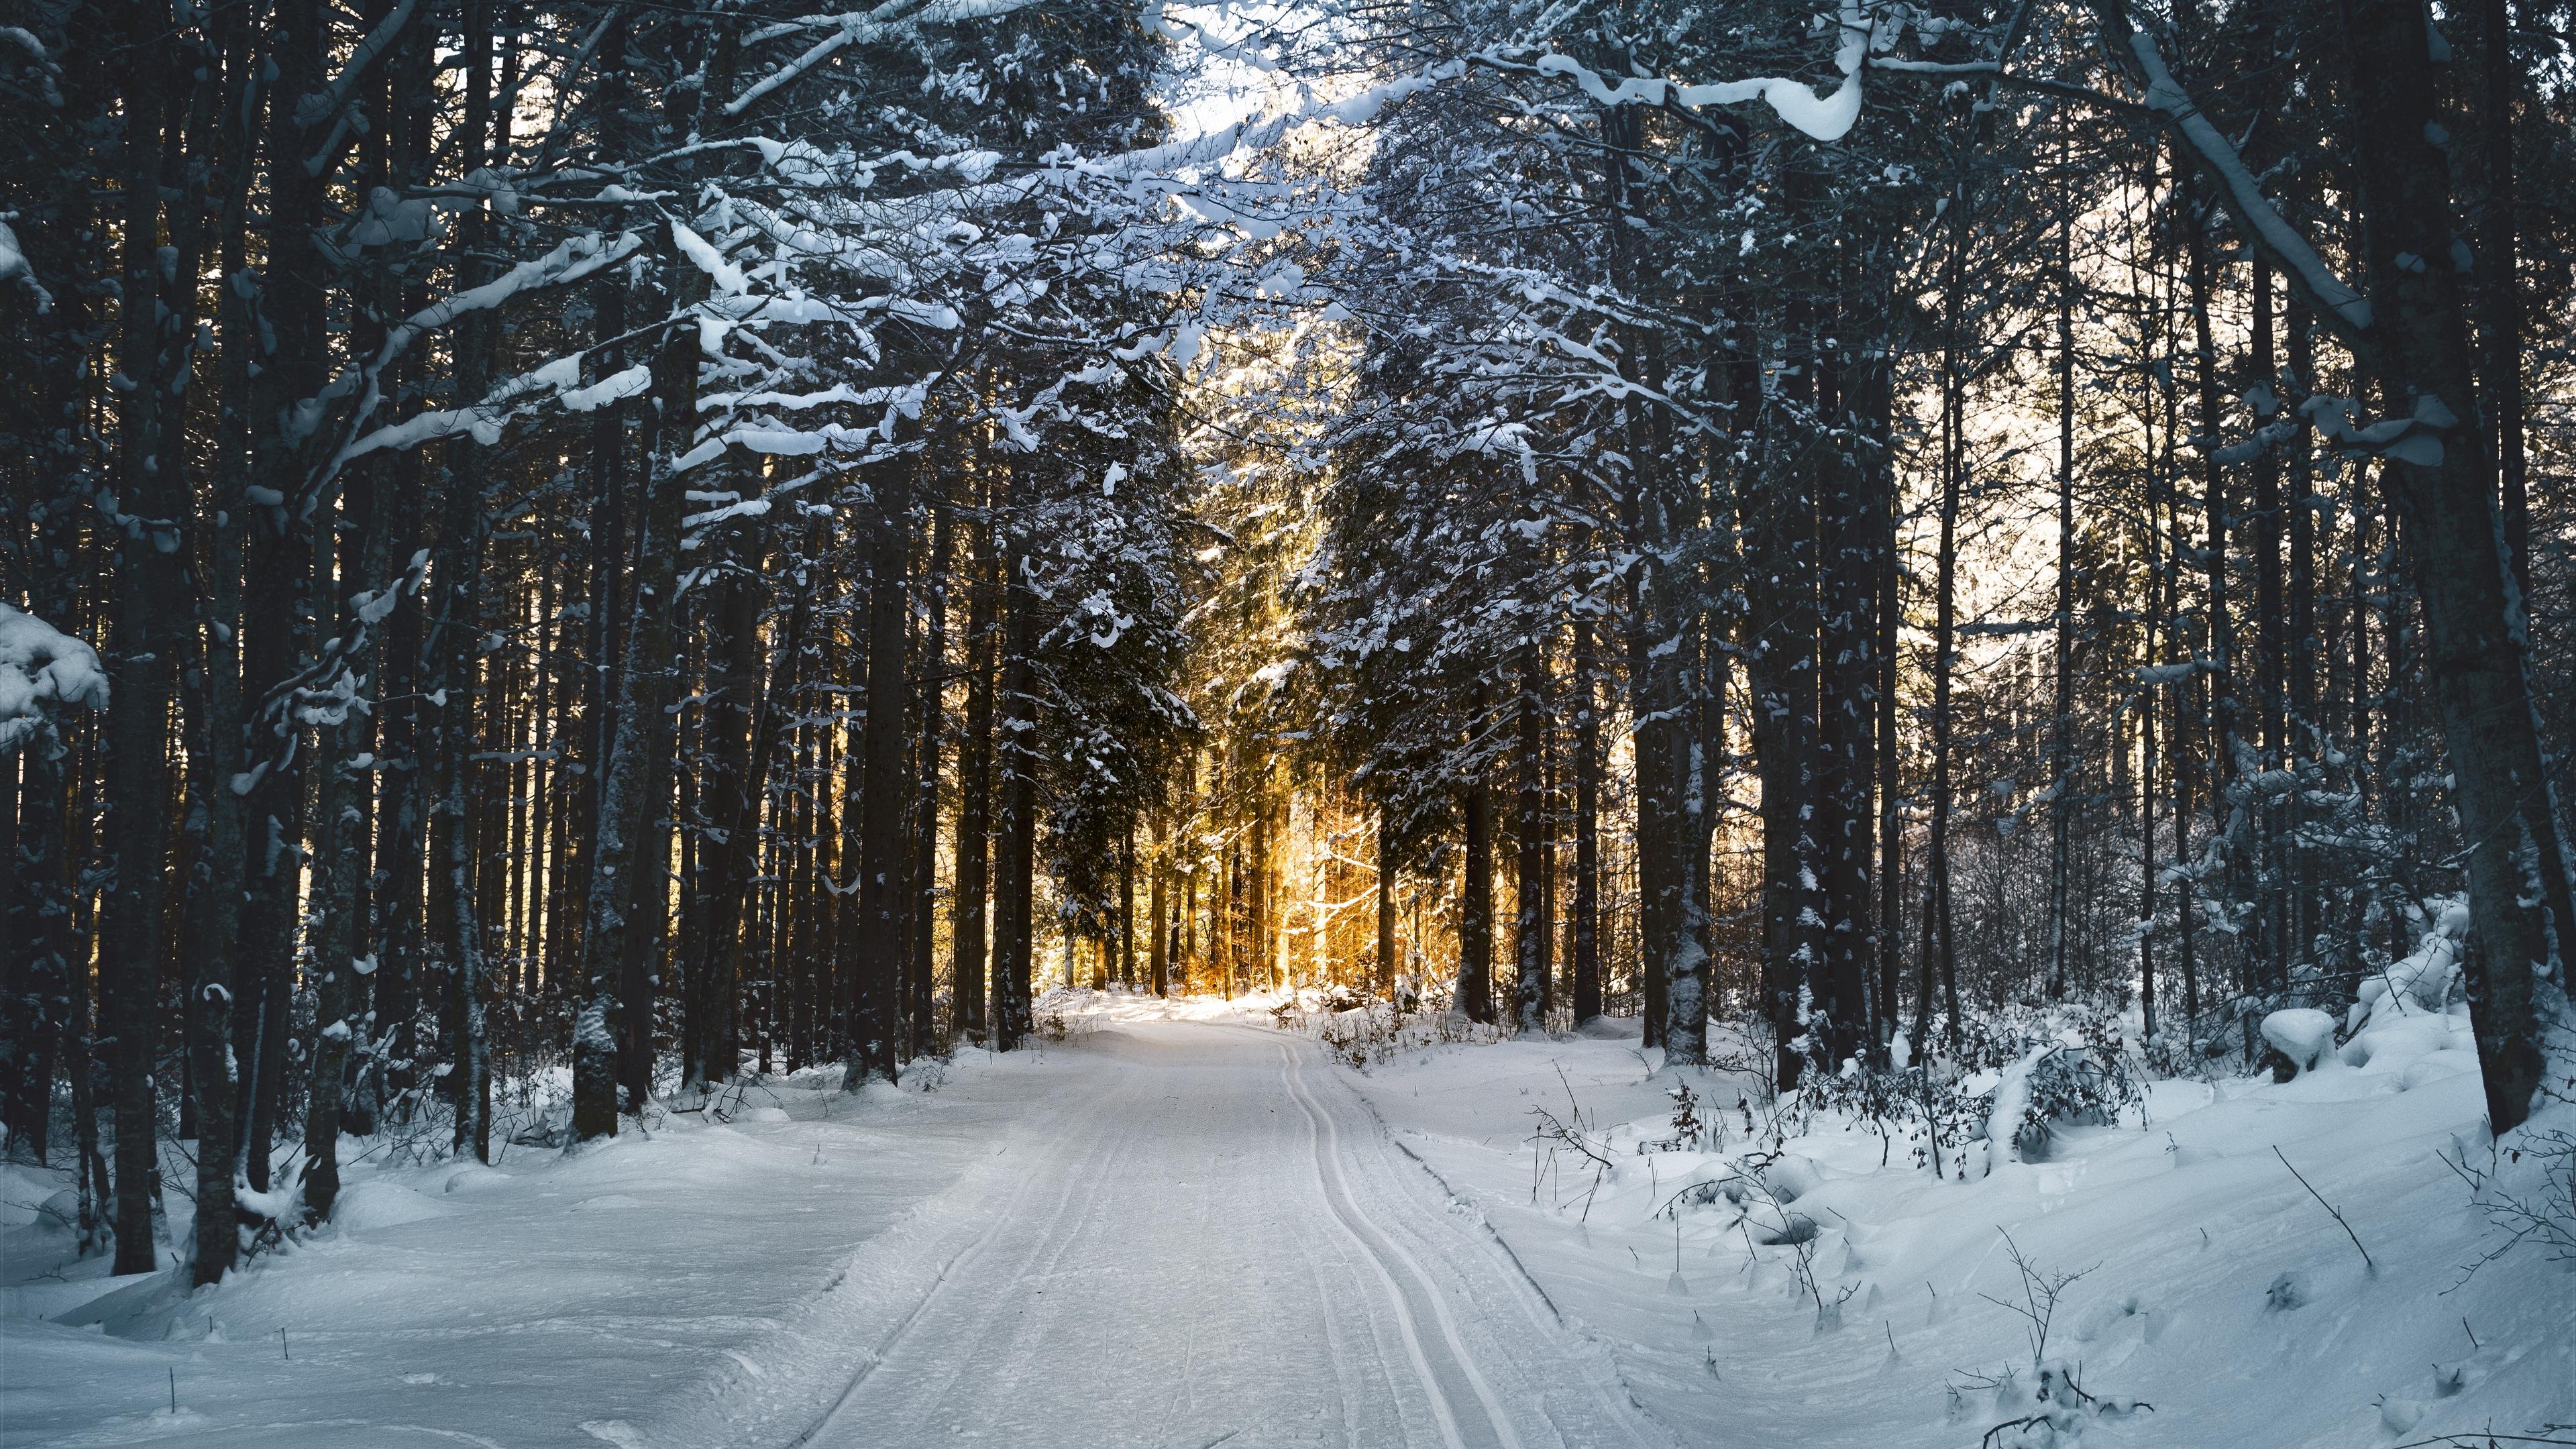 Download wallpaper 3840x2160 winter, snow, road, trees 4k